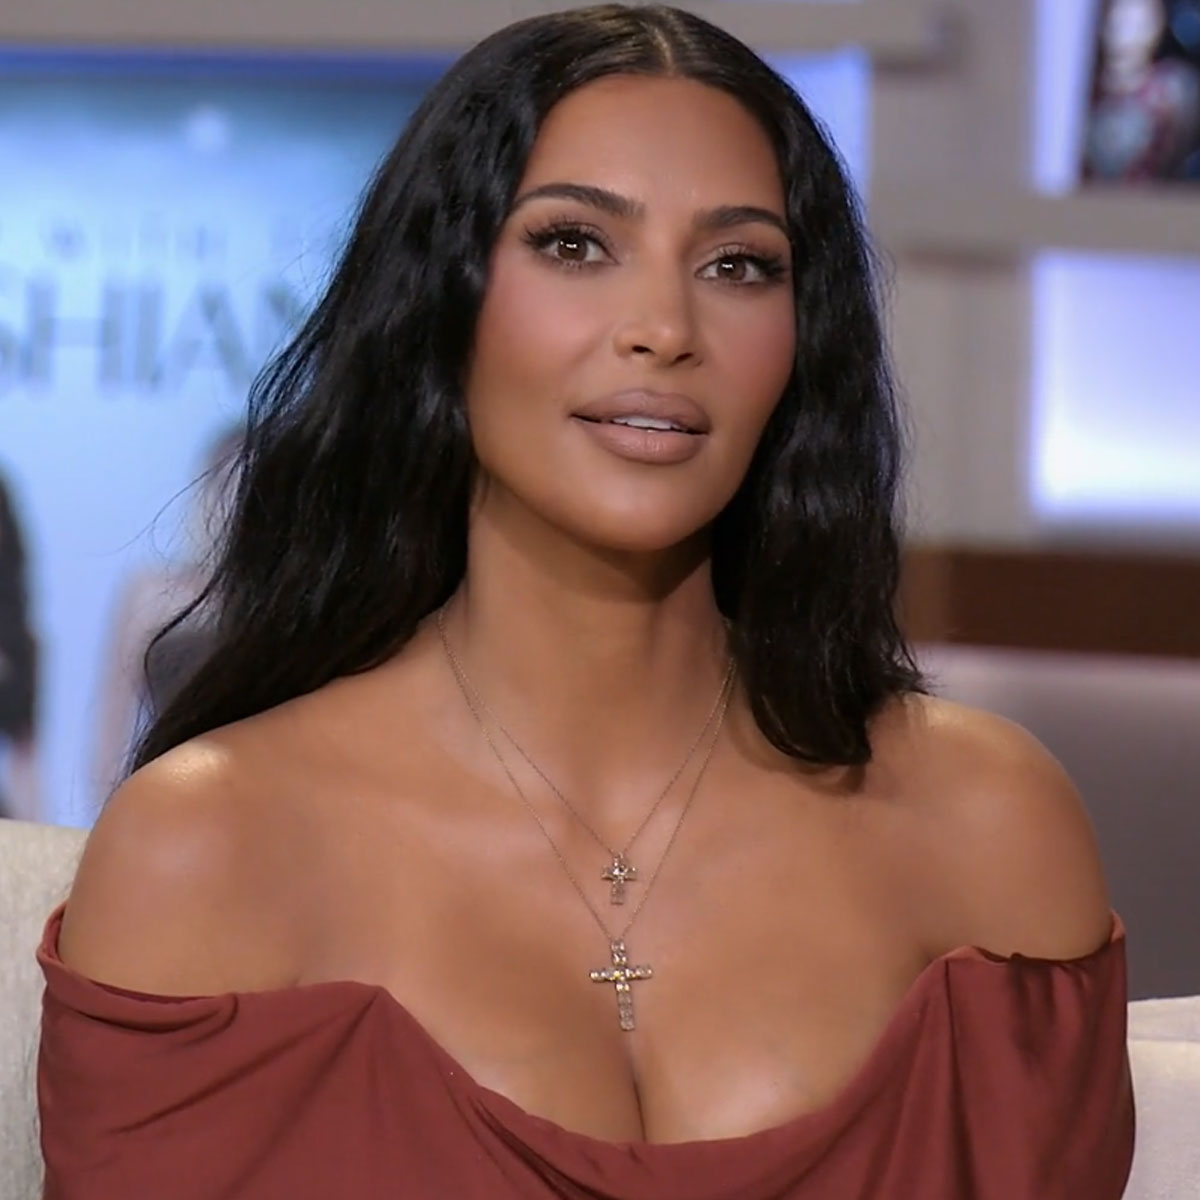 New Tape Kim Kardashian Having Sex - Kim Kardashian Admits Infamous Sex Tape Helped Success of KUWTK - E! Online